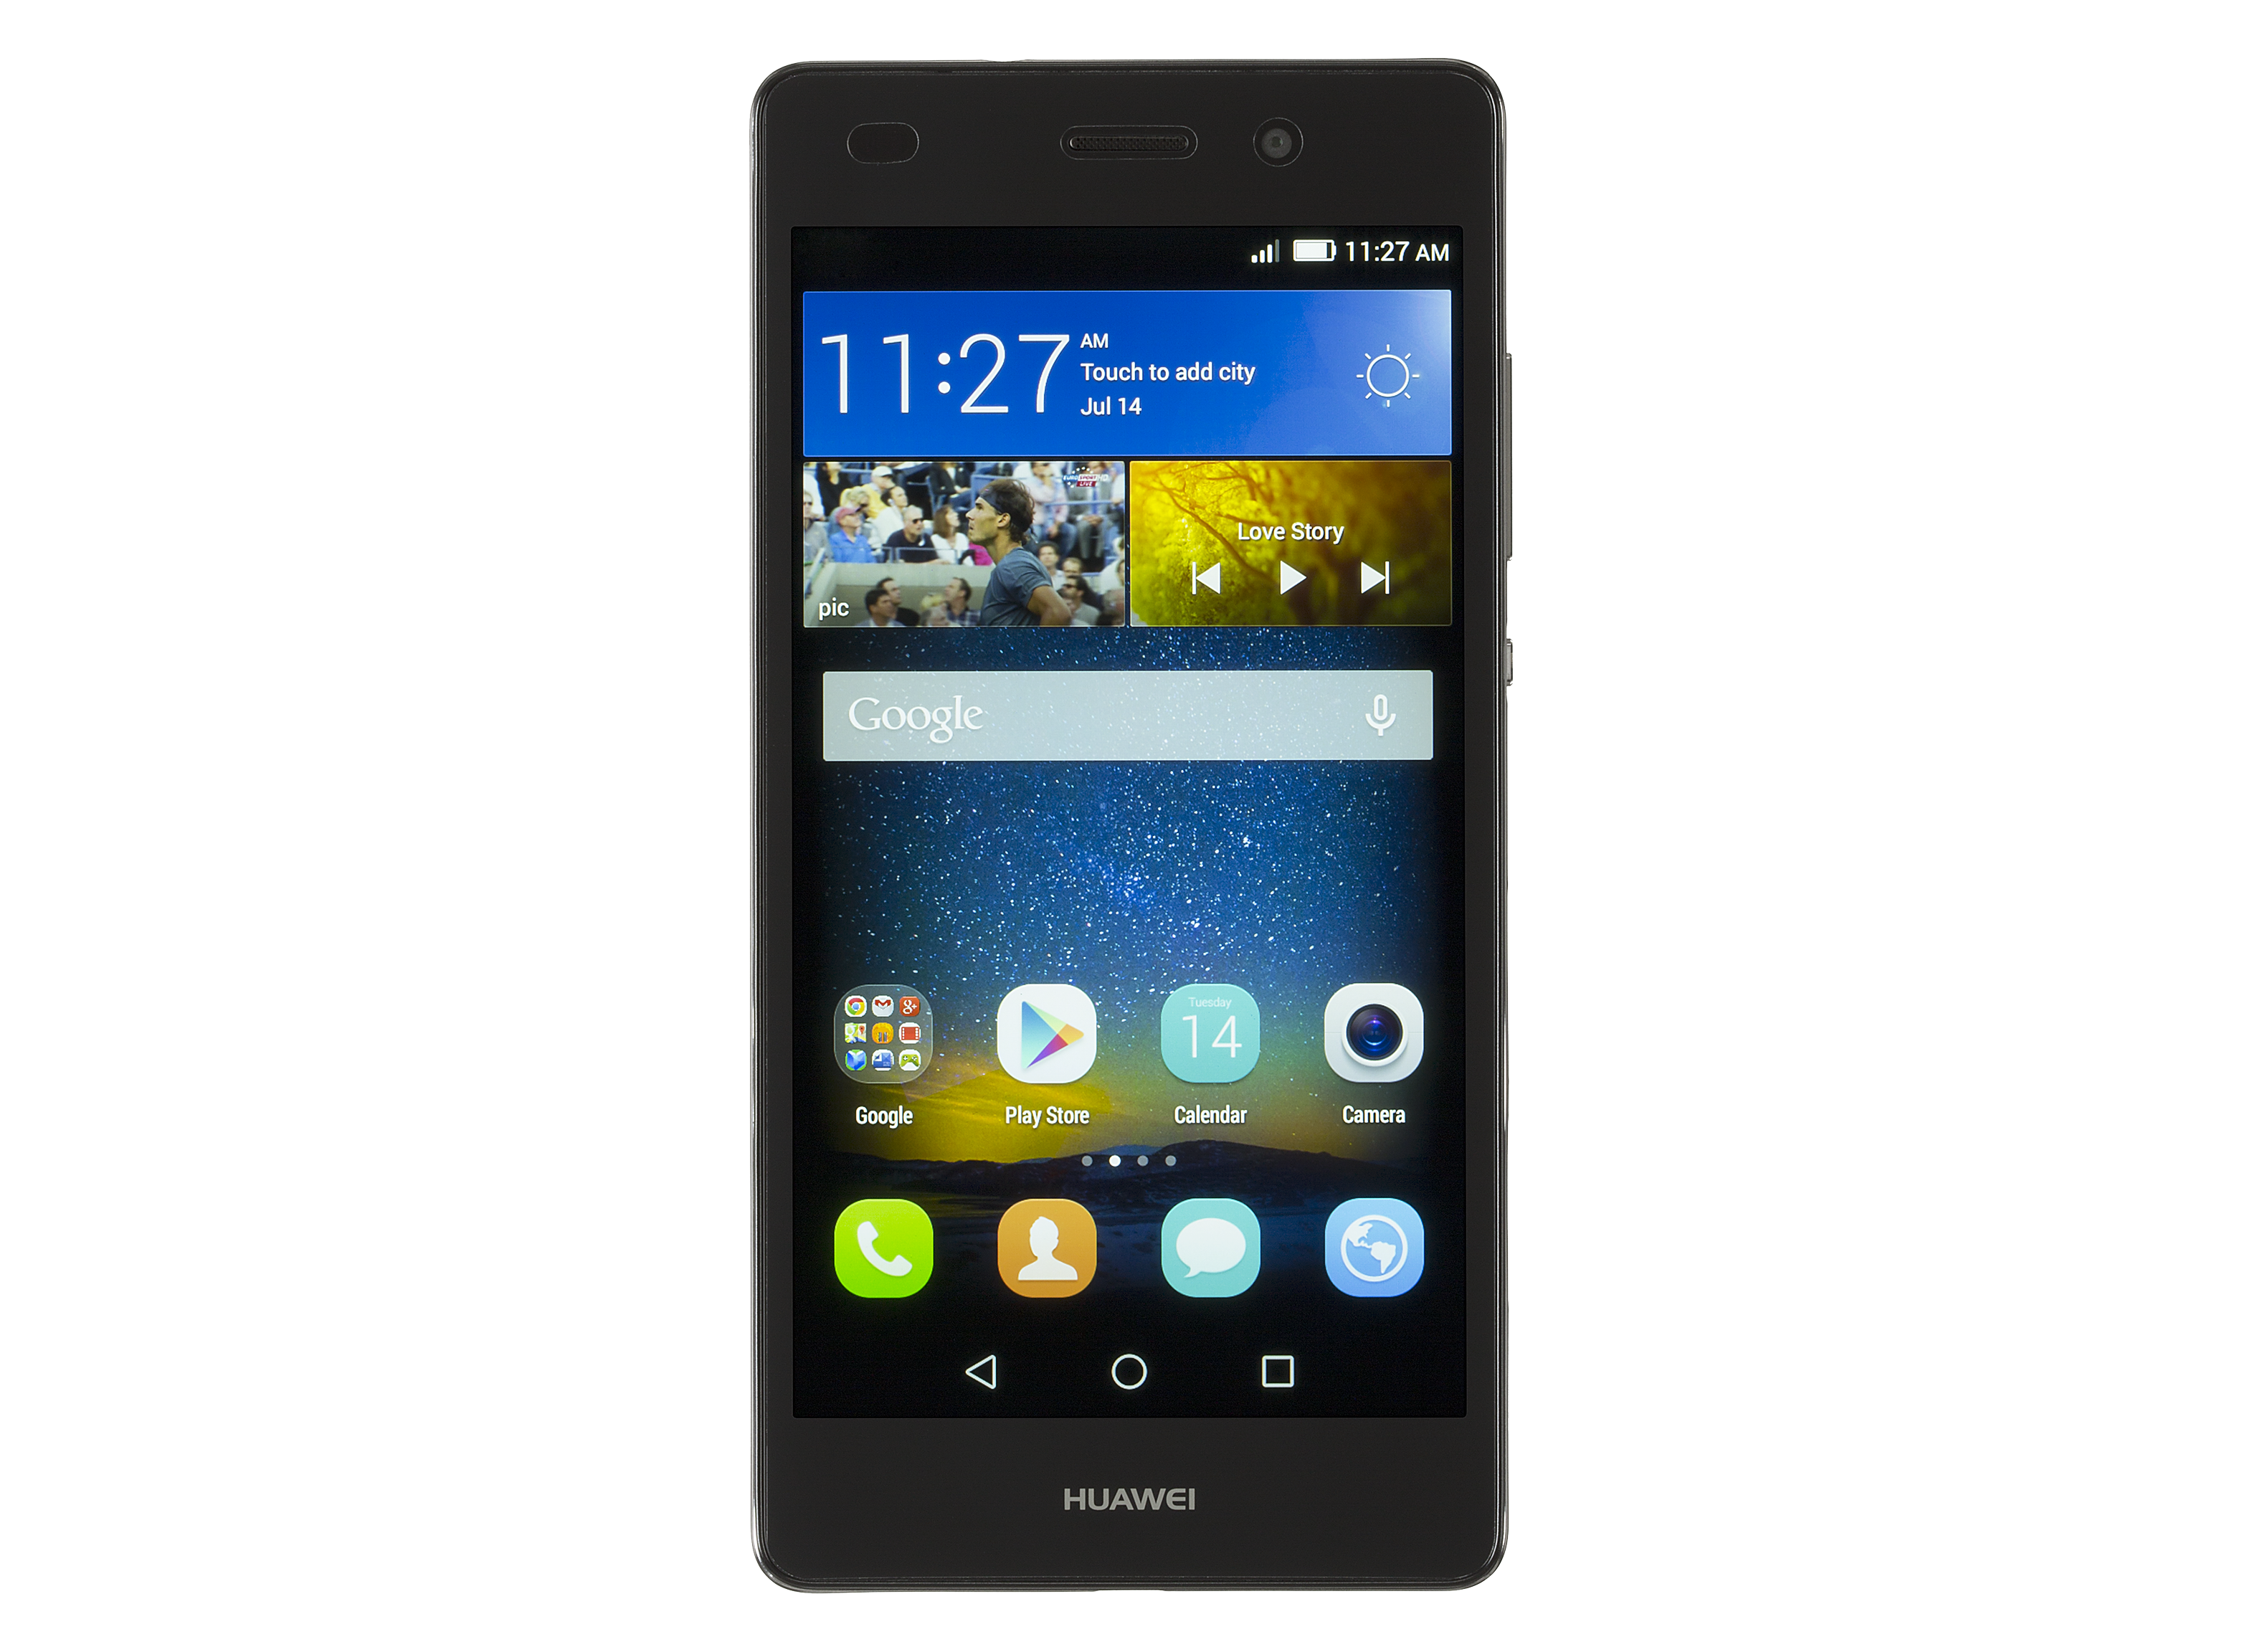 Ladder Ontoegankelijk hulp in de huishouding Huawei P8 Lite Cell Phone Review - Consumer Reports